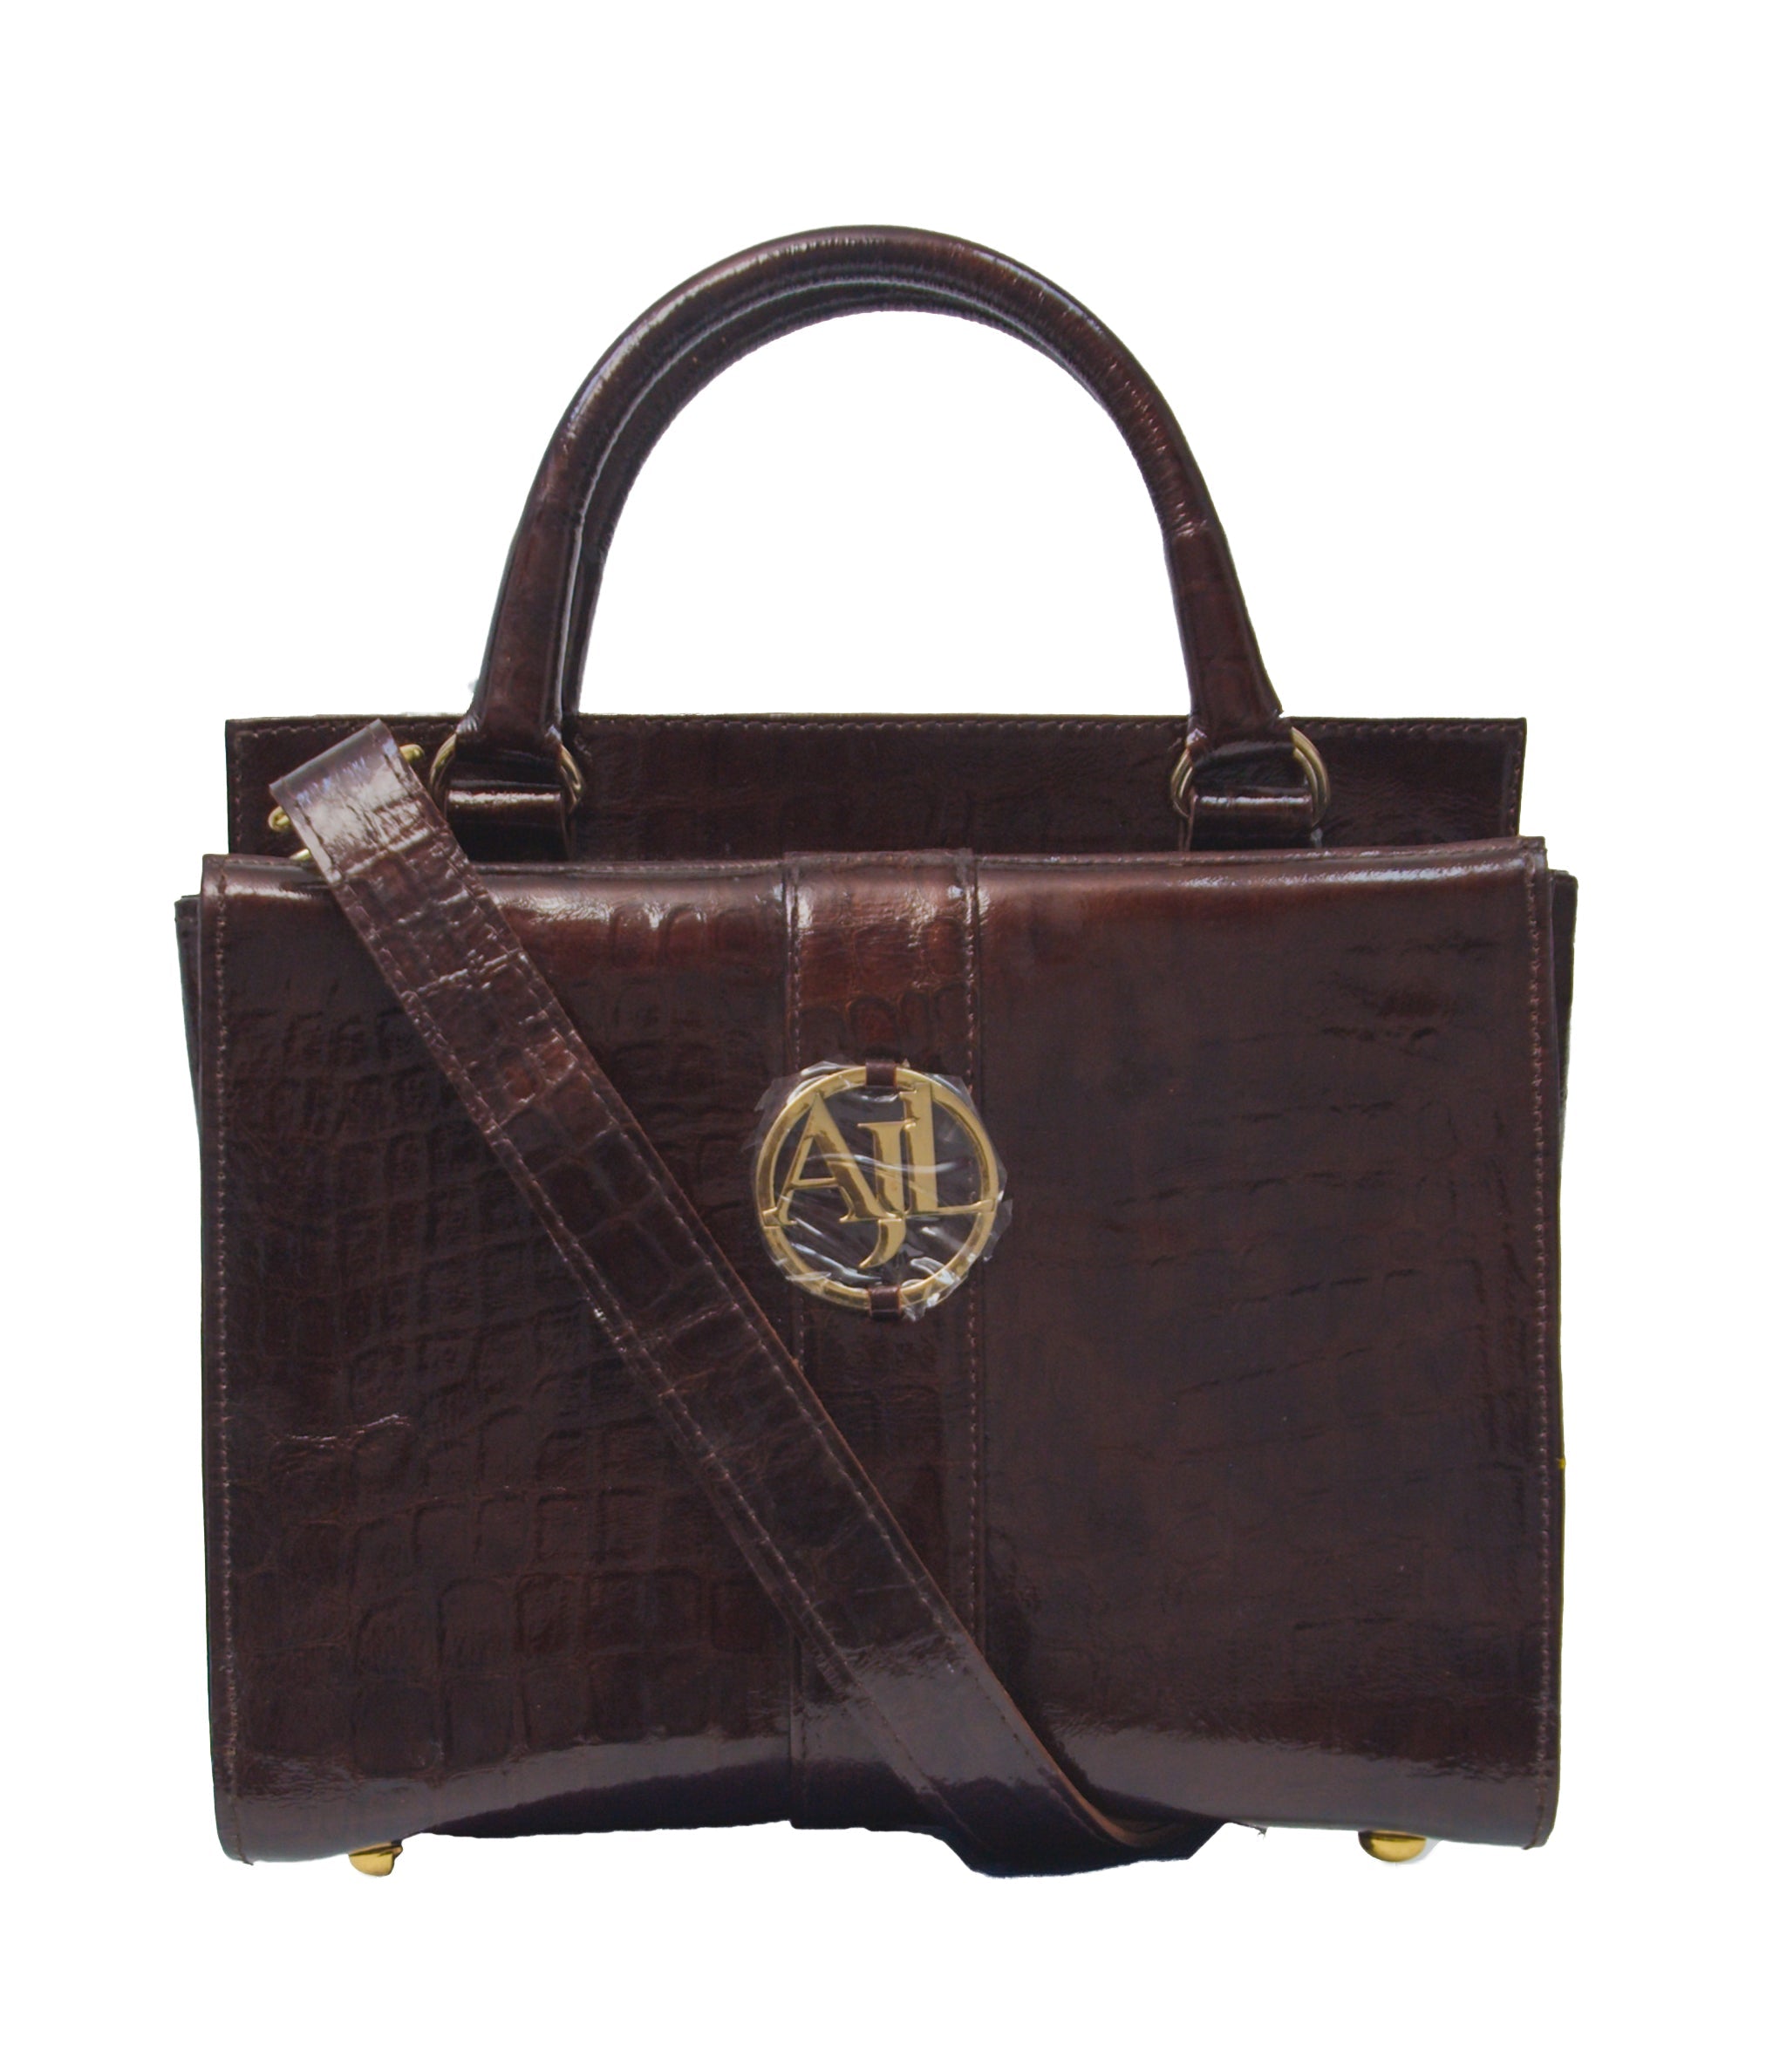 Burgundy croc leather Midi handbags